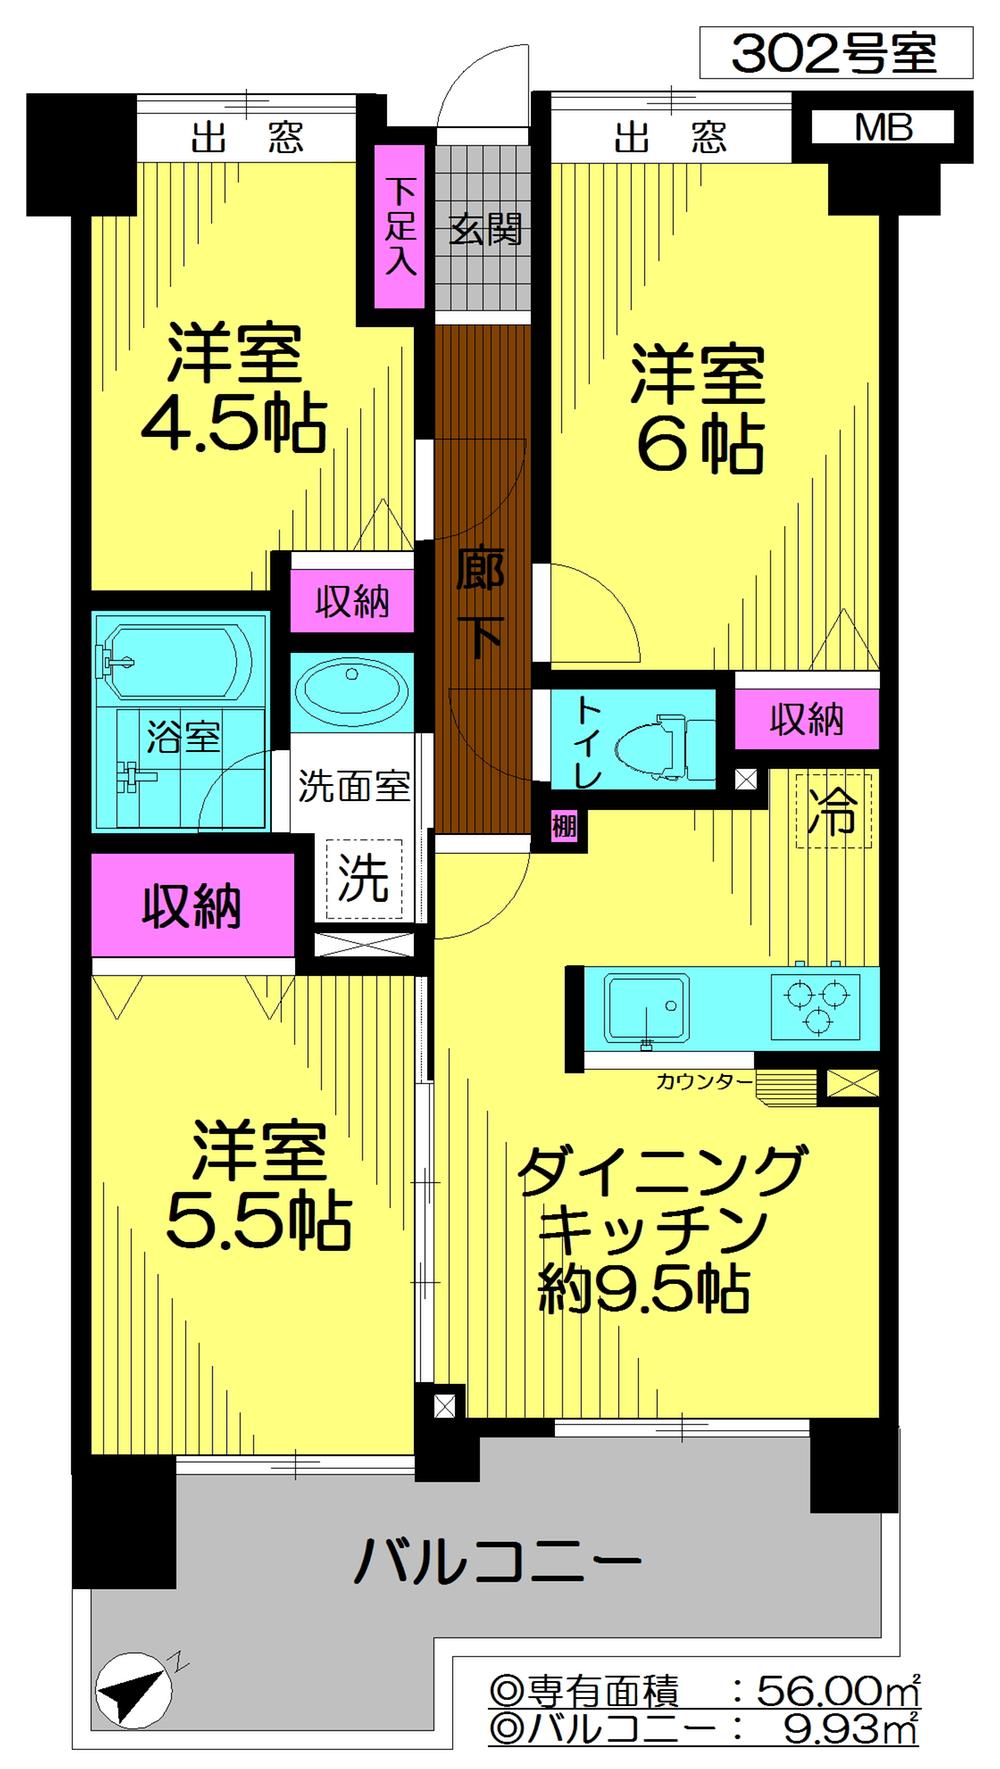 Floor plan. 3DK, Price 15,980,000 yen, Footprint 56 sq m , Balcony area 9.93 sq m new renovation already 3DK